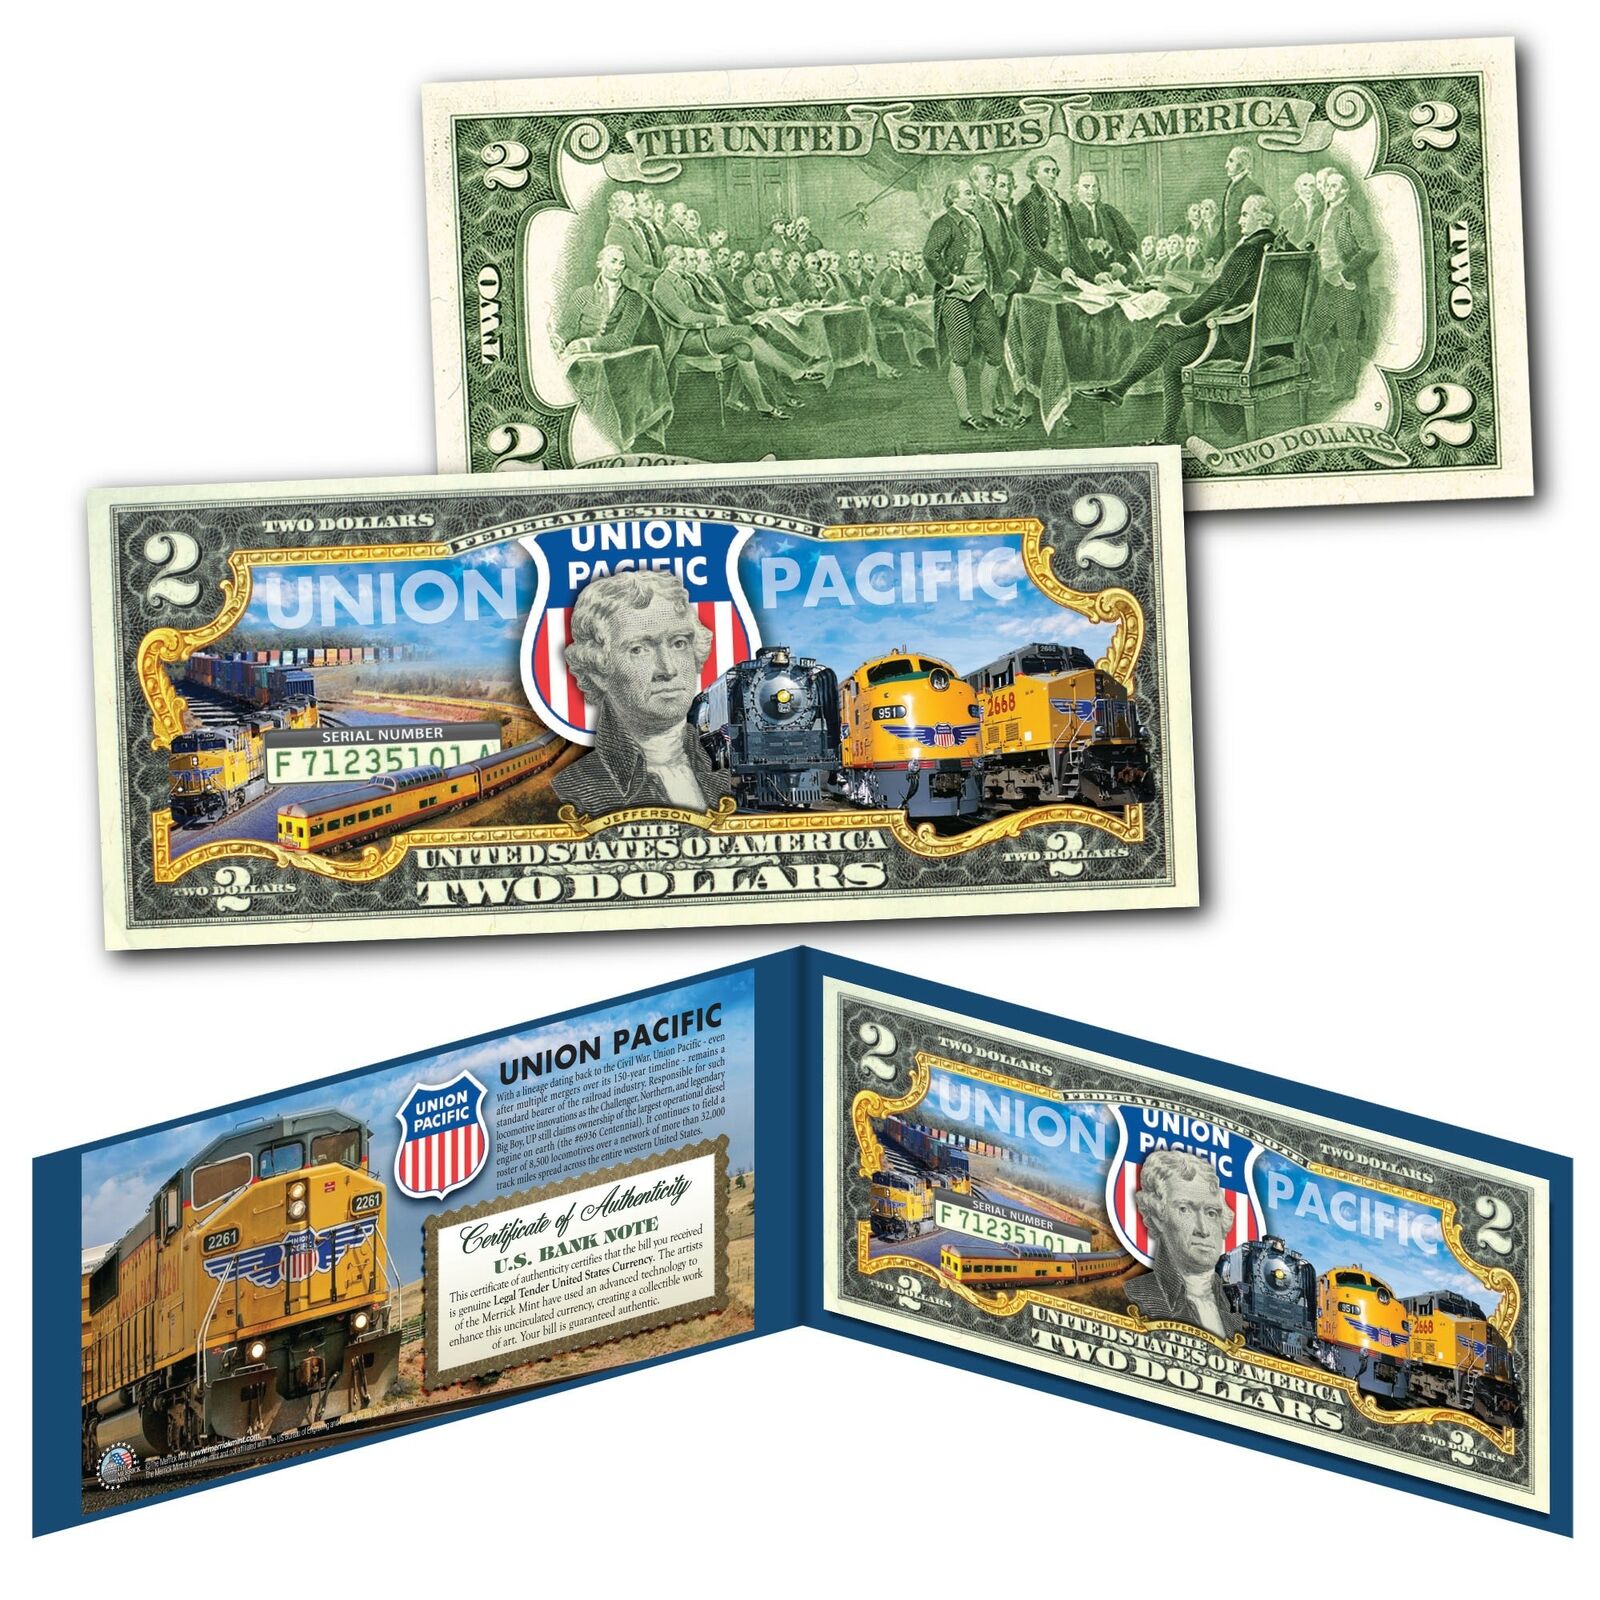 UNION PACIFIC Train Company GE Locomotive Railroad U.S. $2 Bill - WORLDS LARGEST